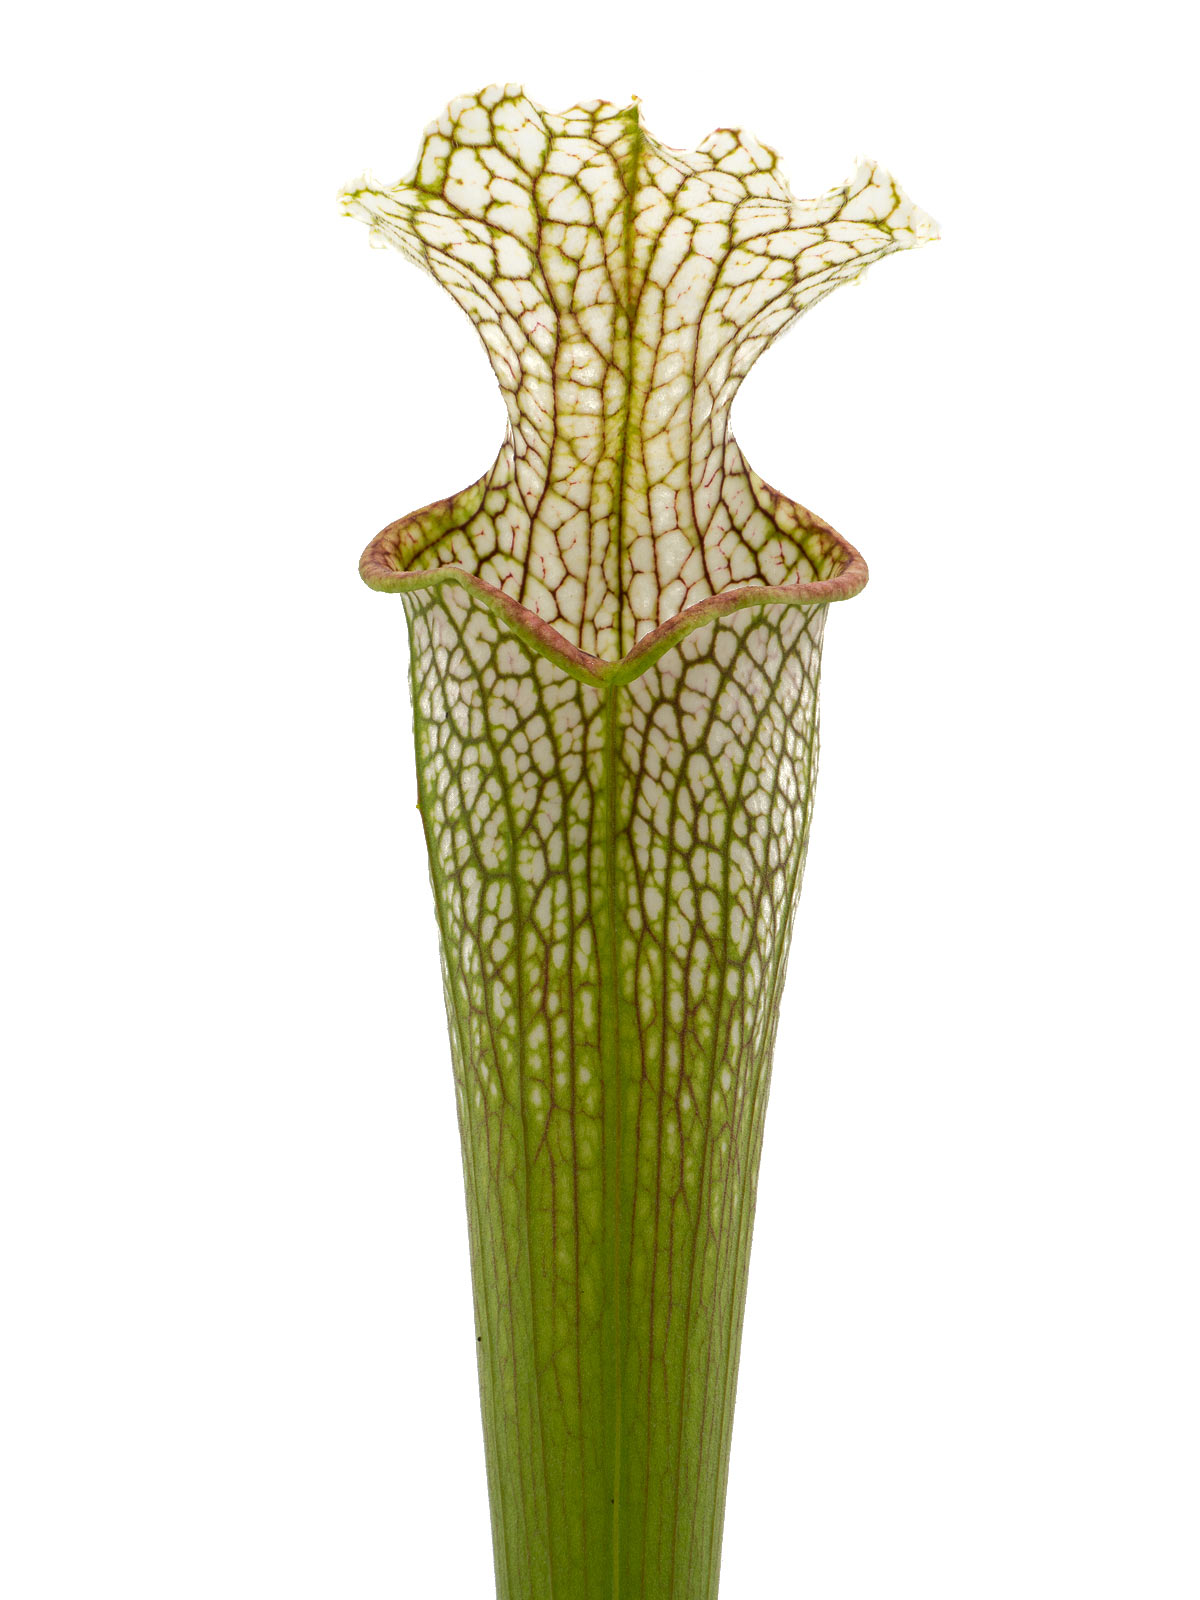 Sarracenia leucophylla - MK L101, stocky autumn pitchers